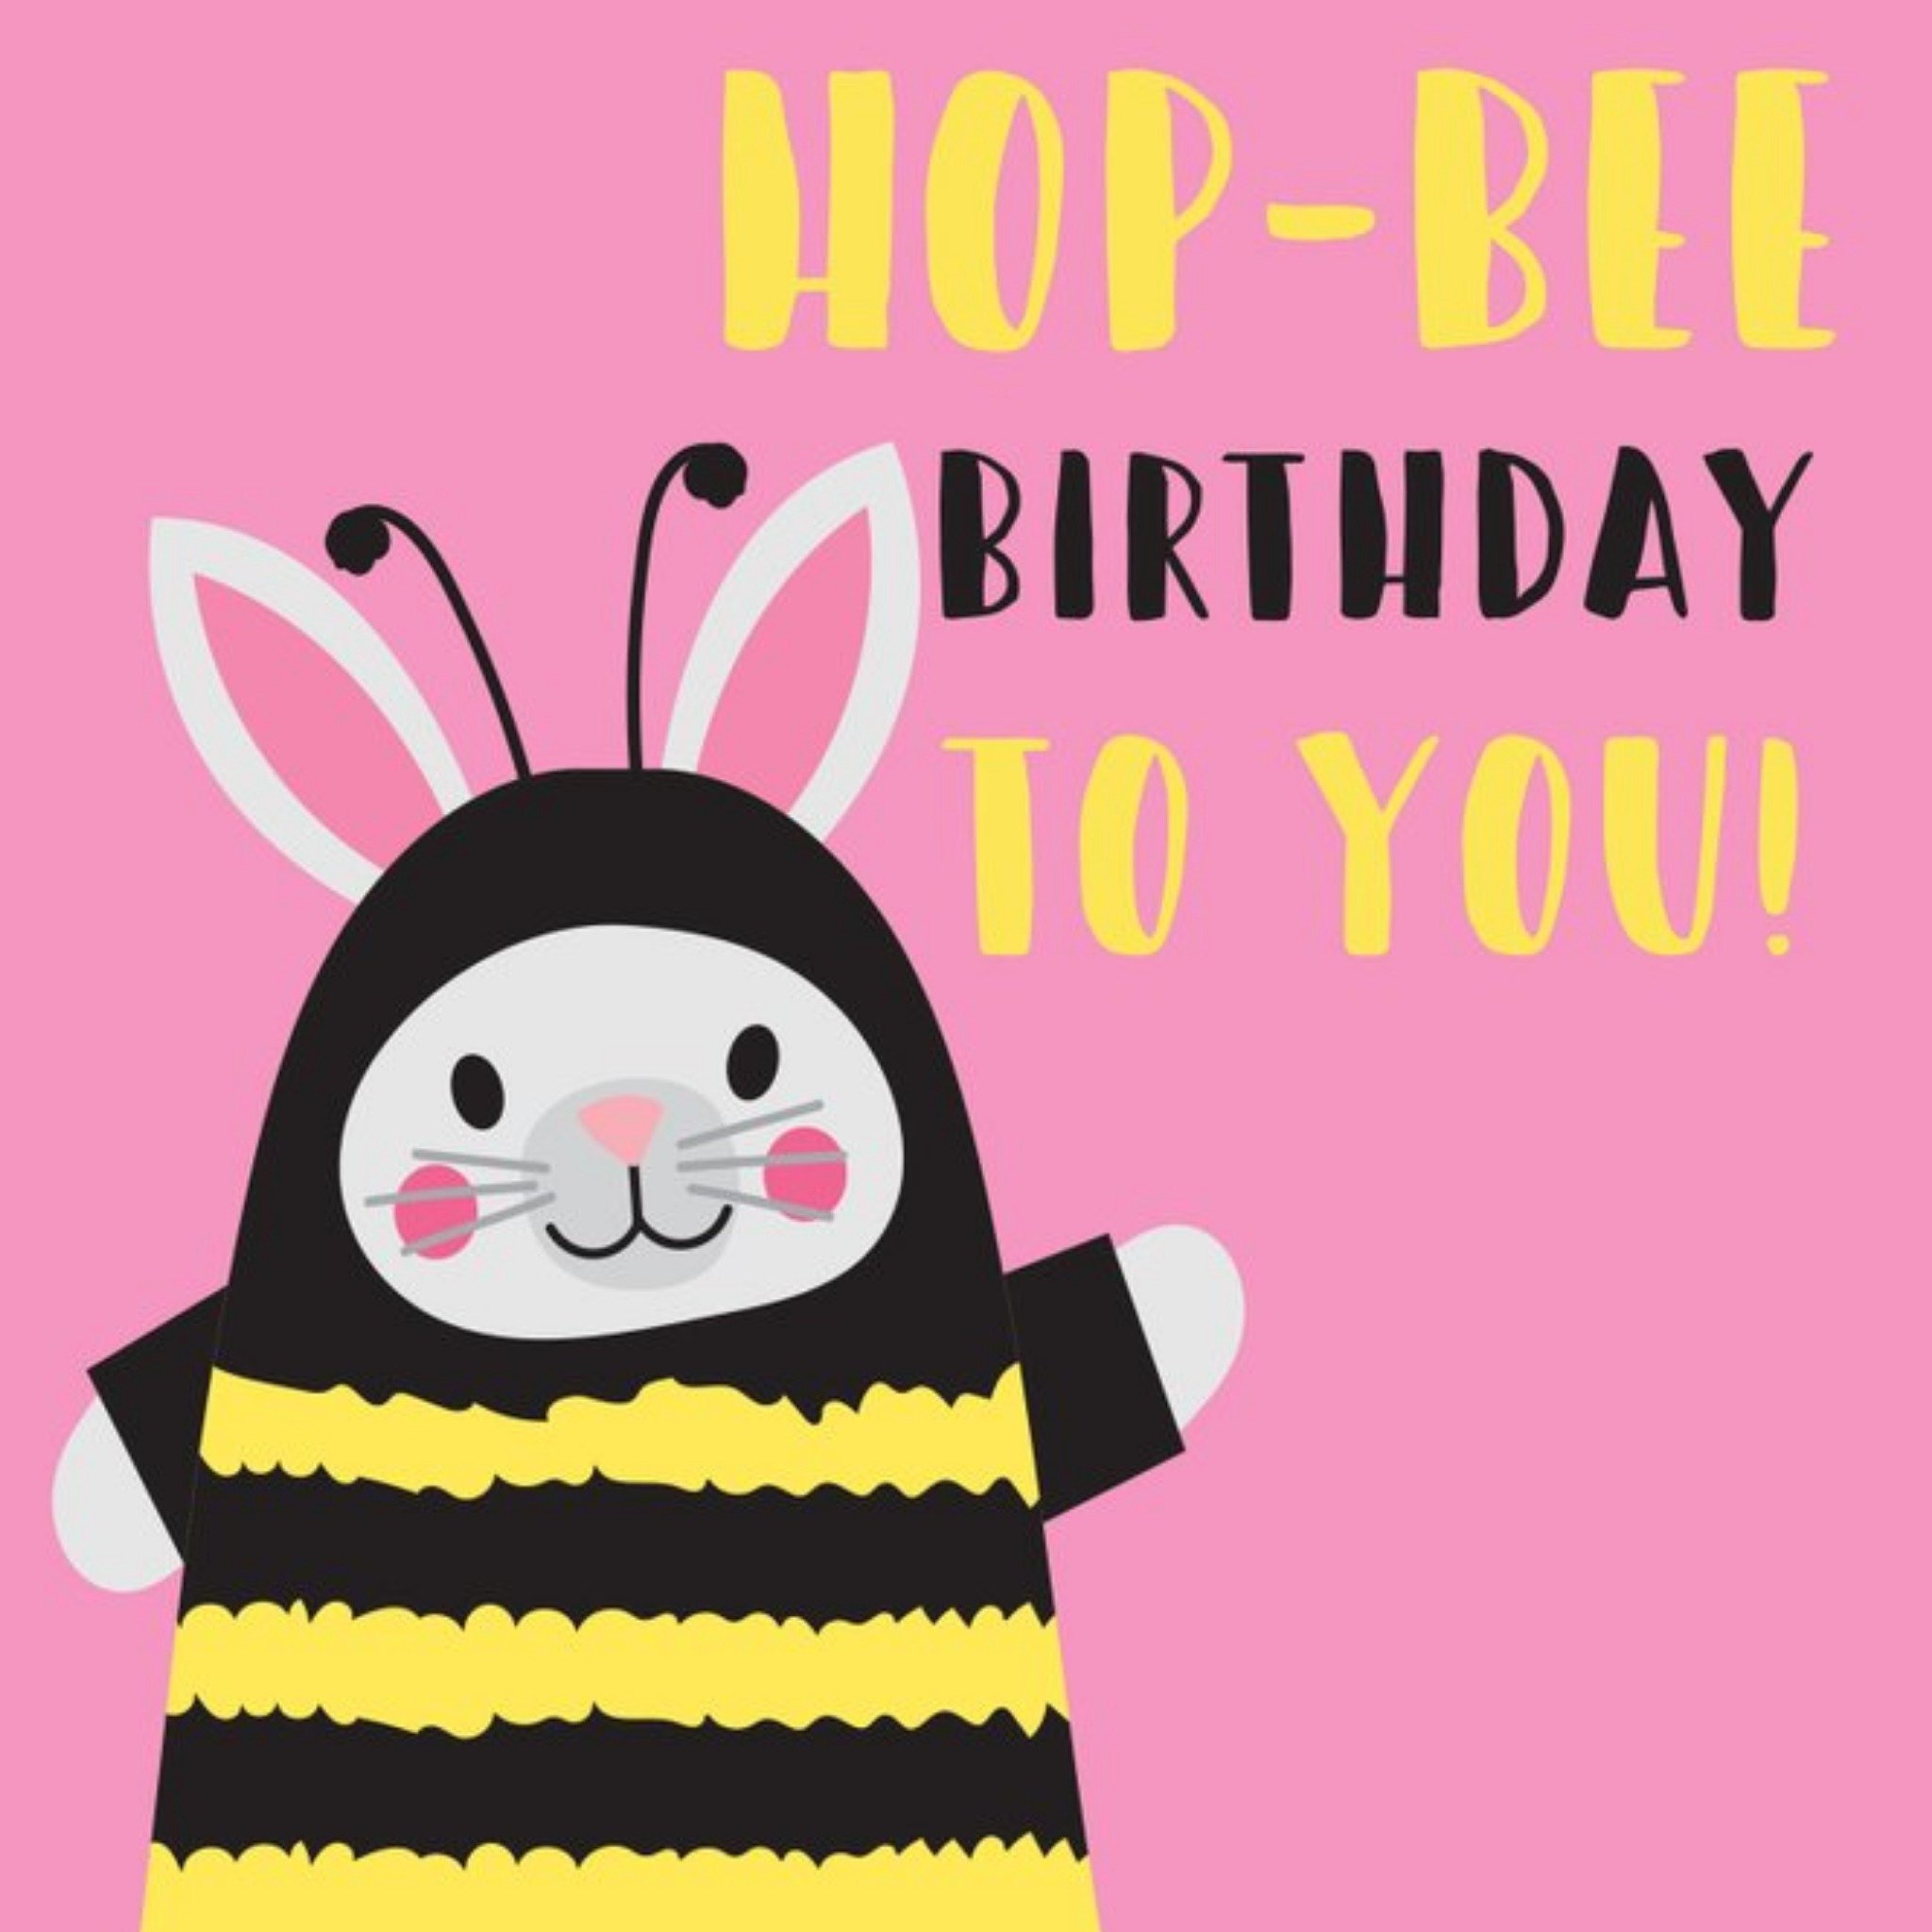 Moonpig Cute Rabbit Dressed As Bee Hop-Bee Birthday Card, Square